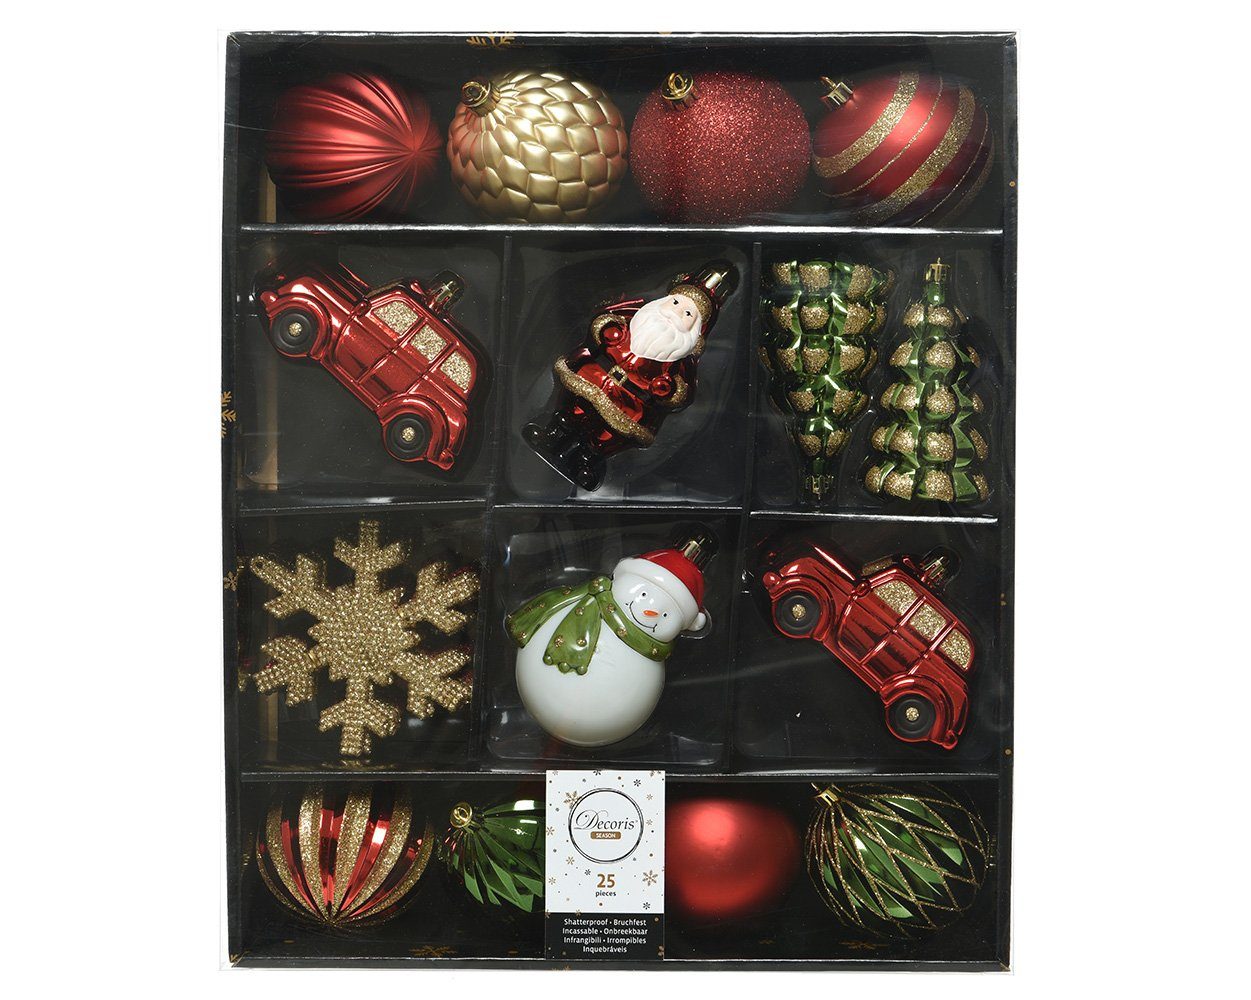 Decoris season decorations Weihnachtsbaumkugel, Новорічні кулі Kunststoff mit Фігурки 8cm rot / gold, 25er Set